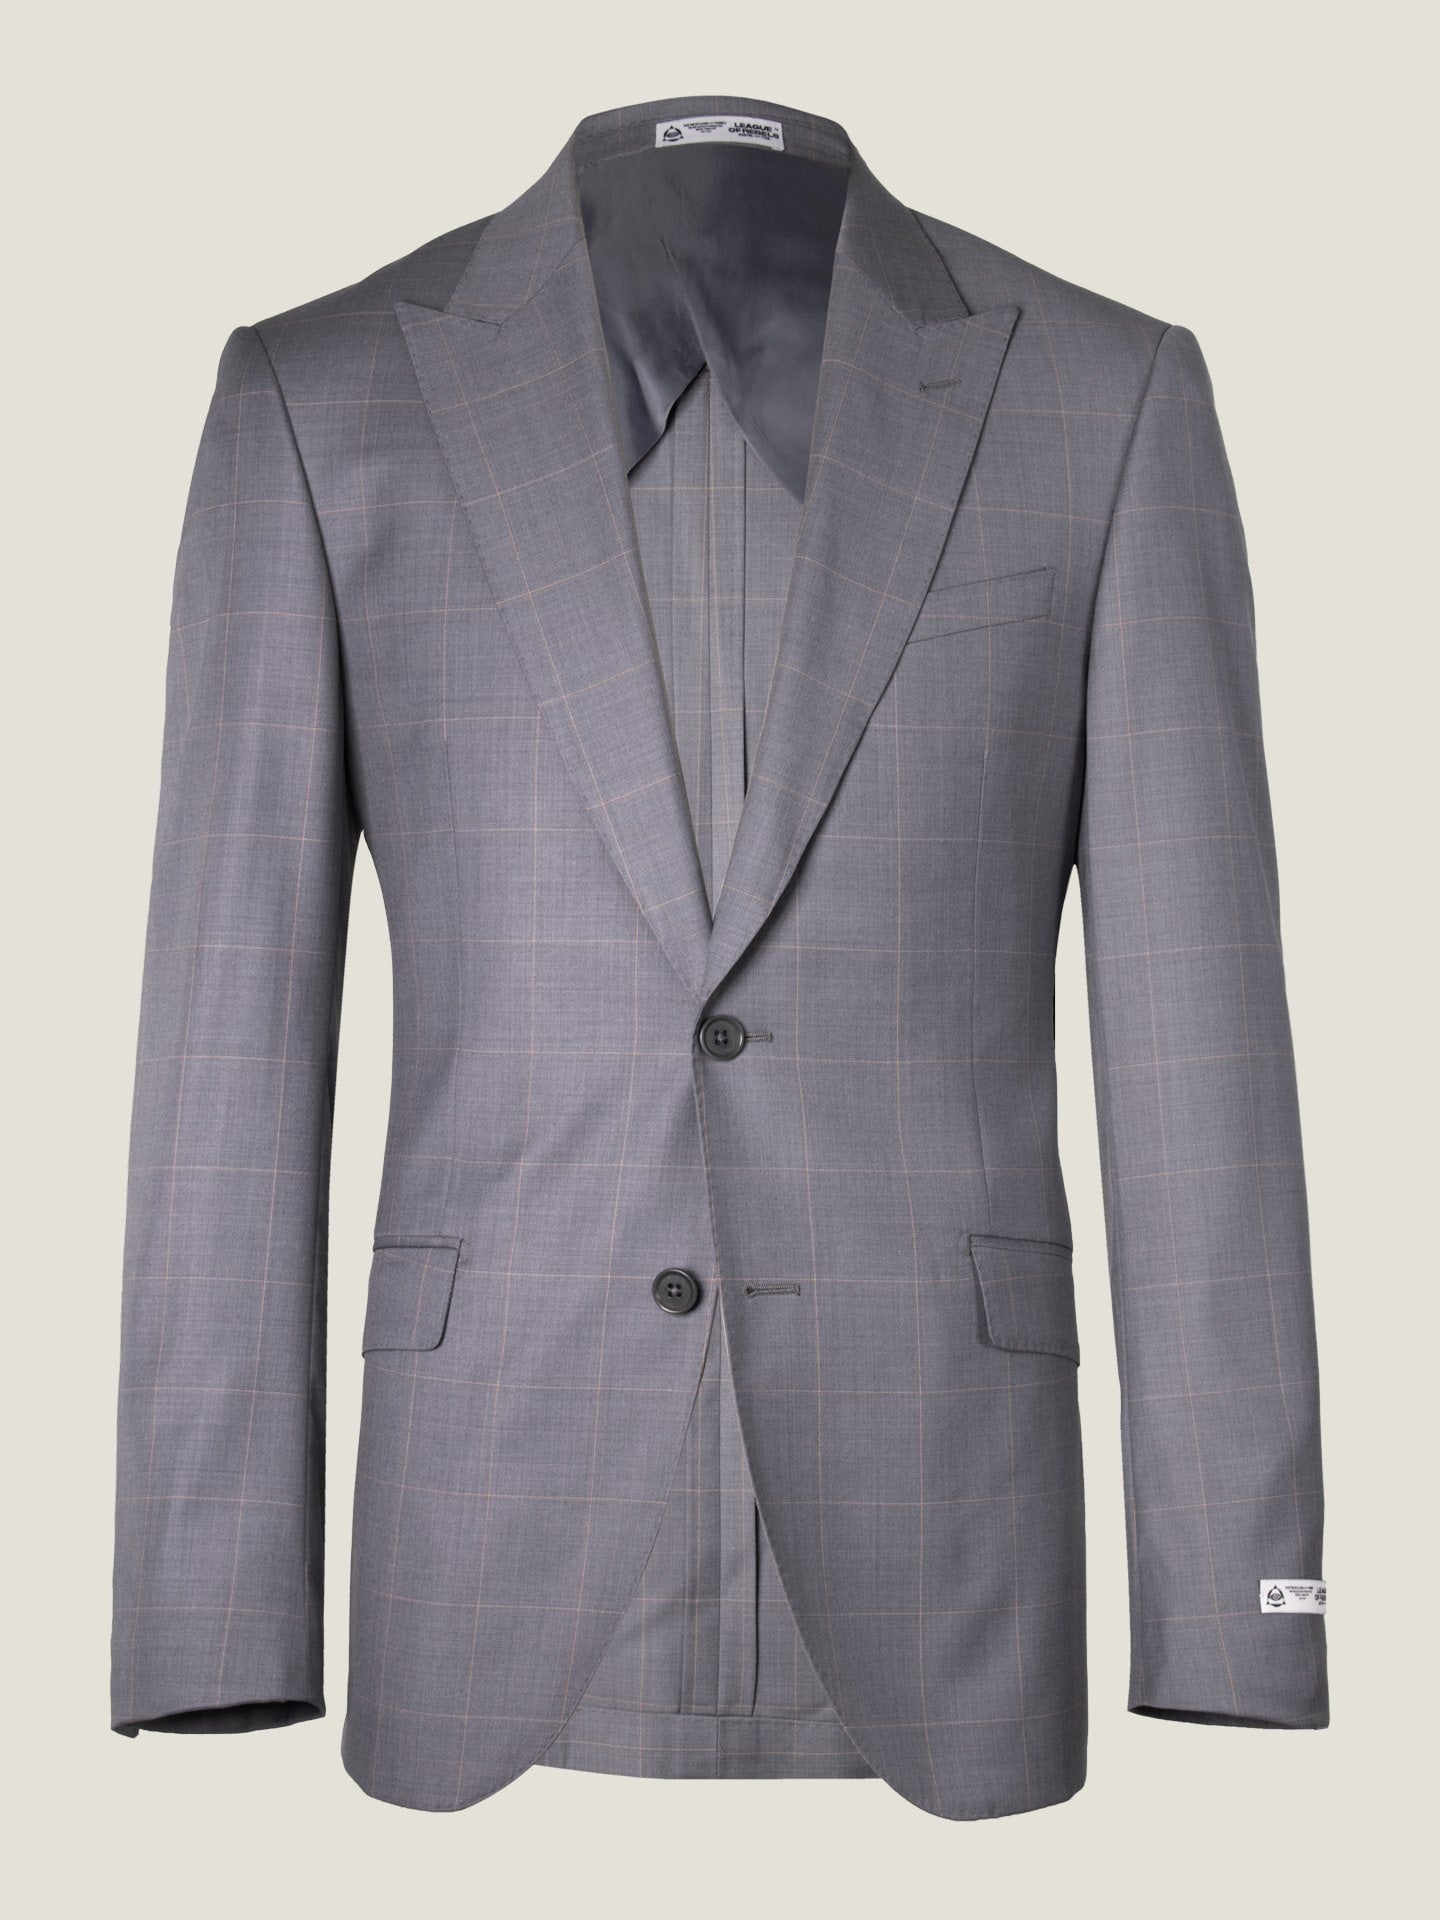 SB2 Grey Windowpane suit